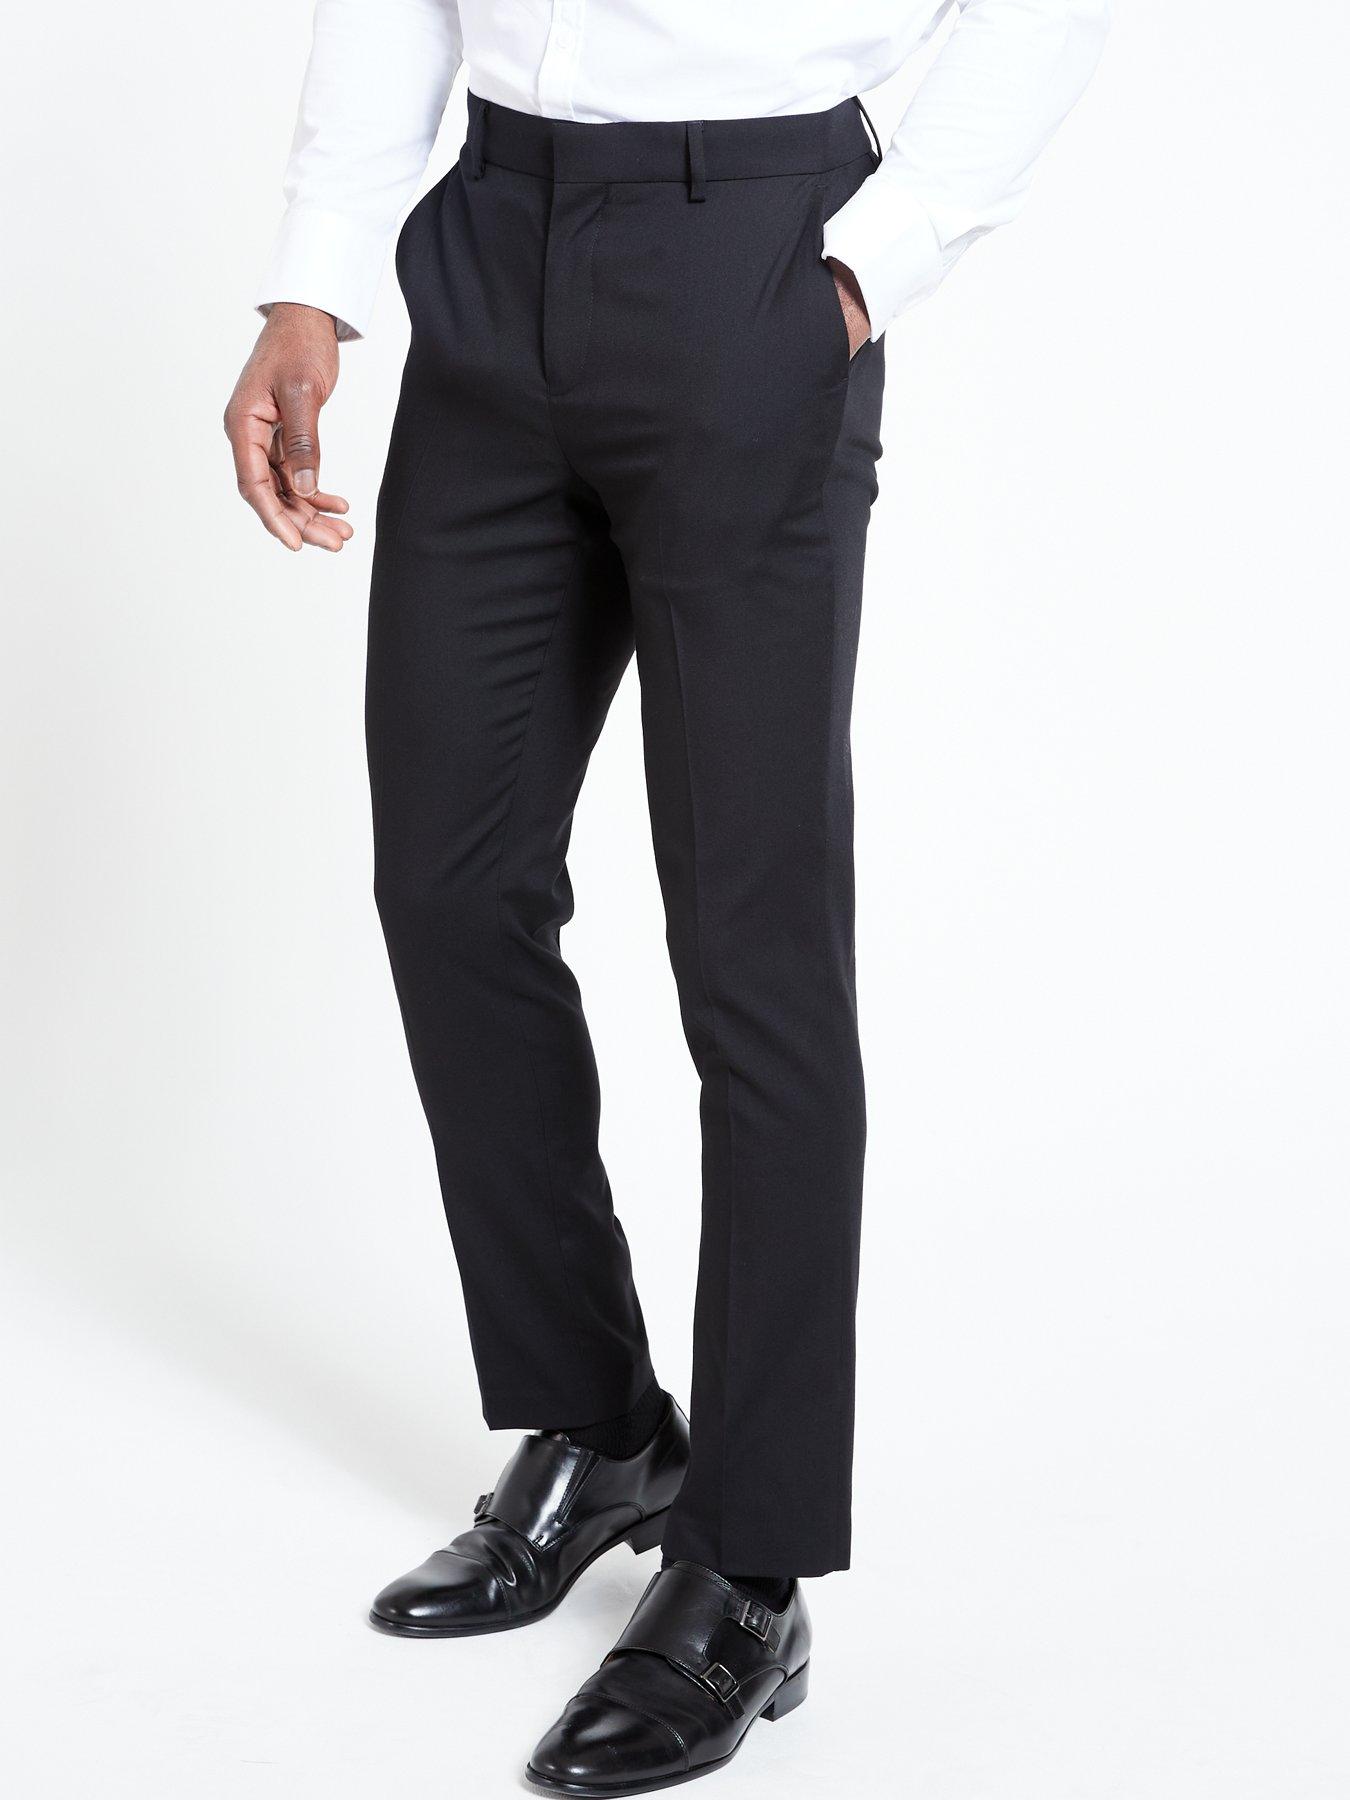 https://media.very.co.uk/i/very/UZMK8_SQ1_0000000004_BLACK_MDf/everyday-slim-suit-trousers-black.jpg?$180x240_retinamobilex2$